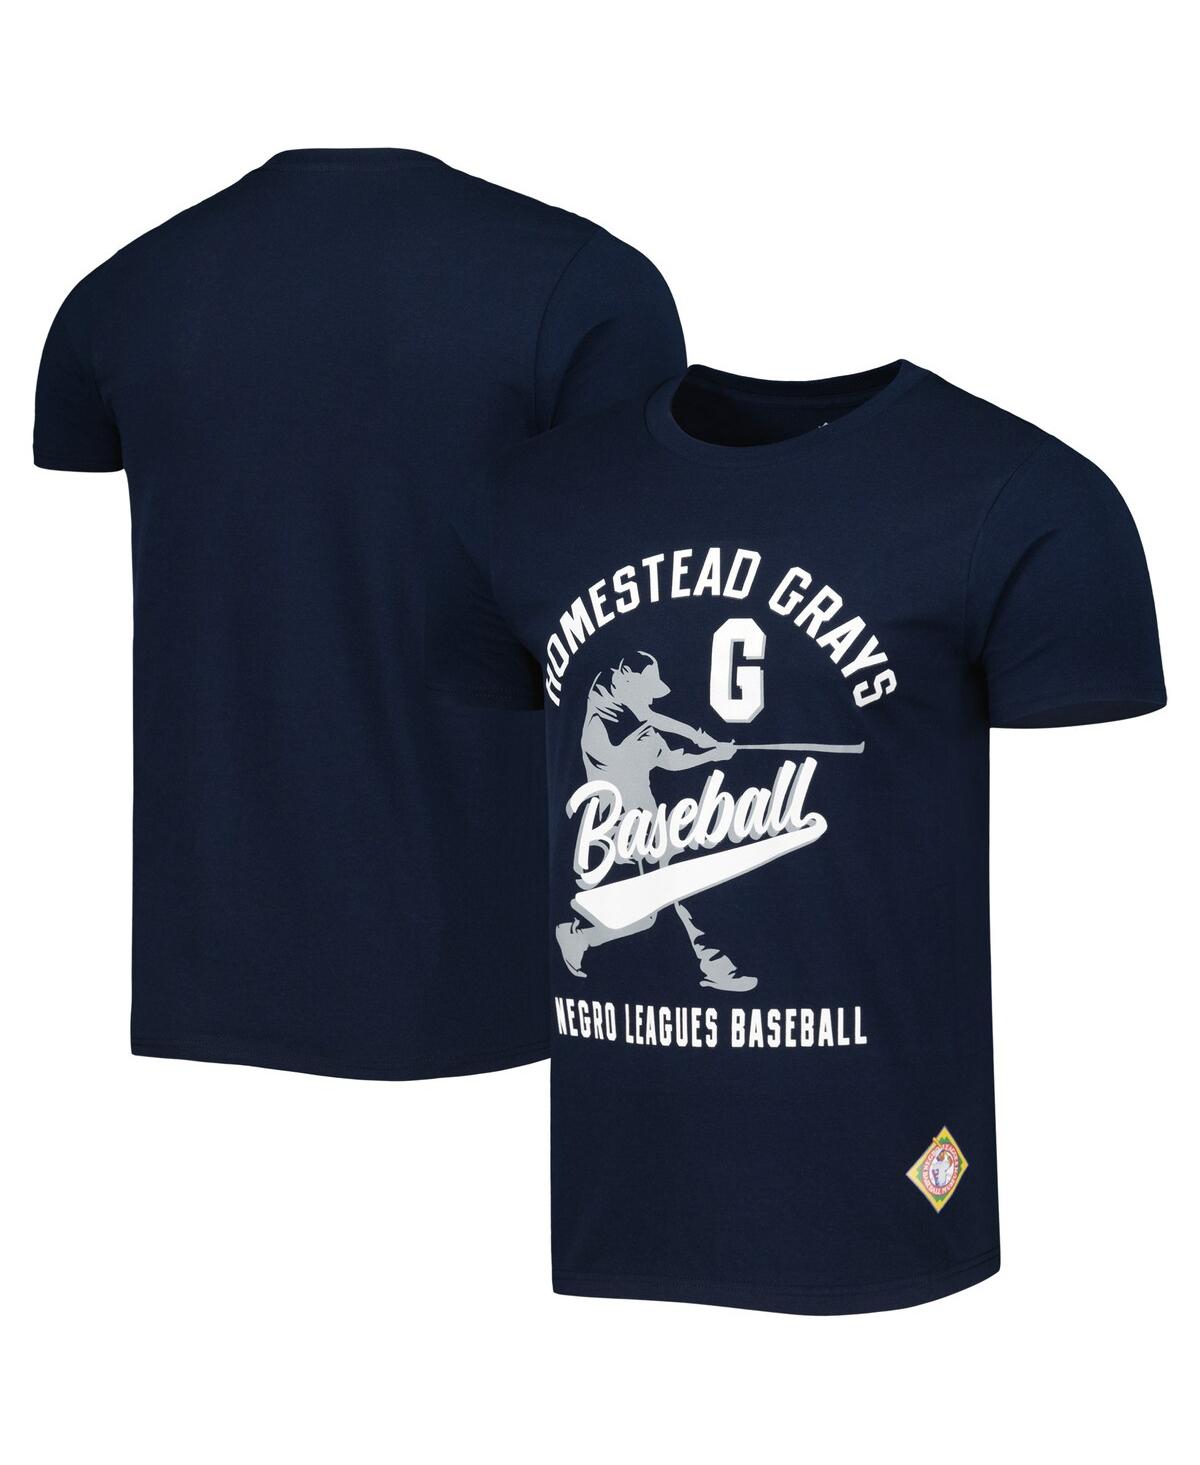 Shop Stitches Men's  Navy Homestead Grays Soft Style T-shirt